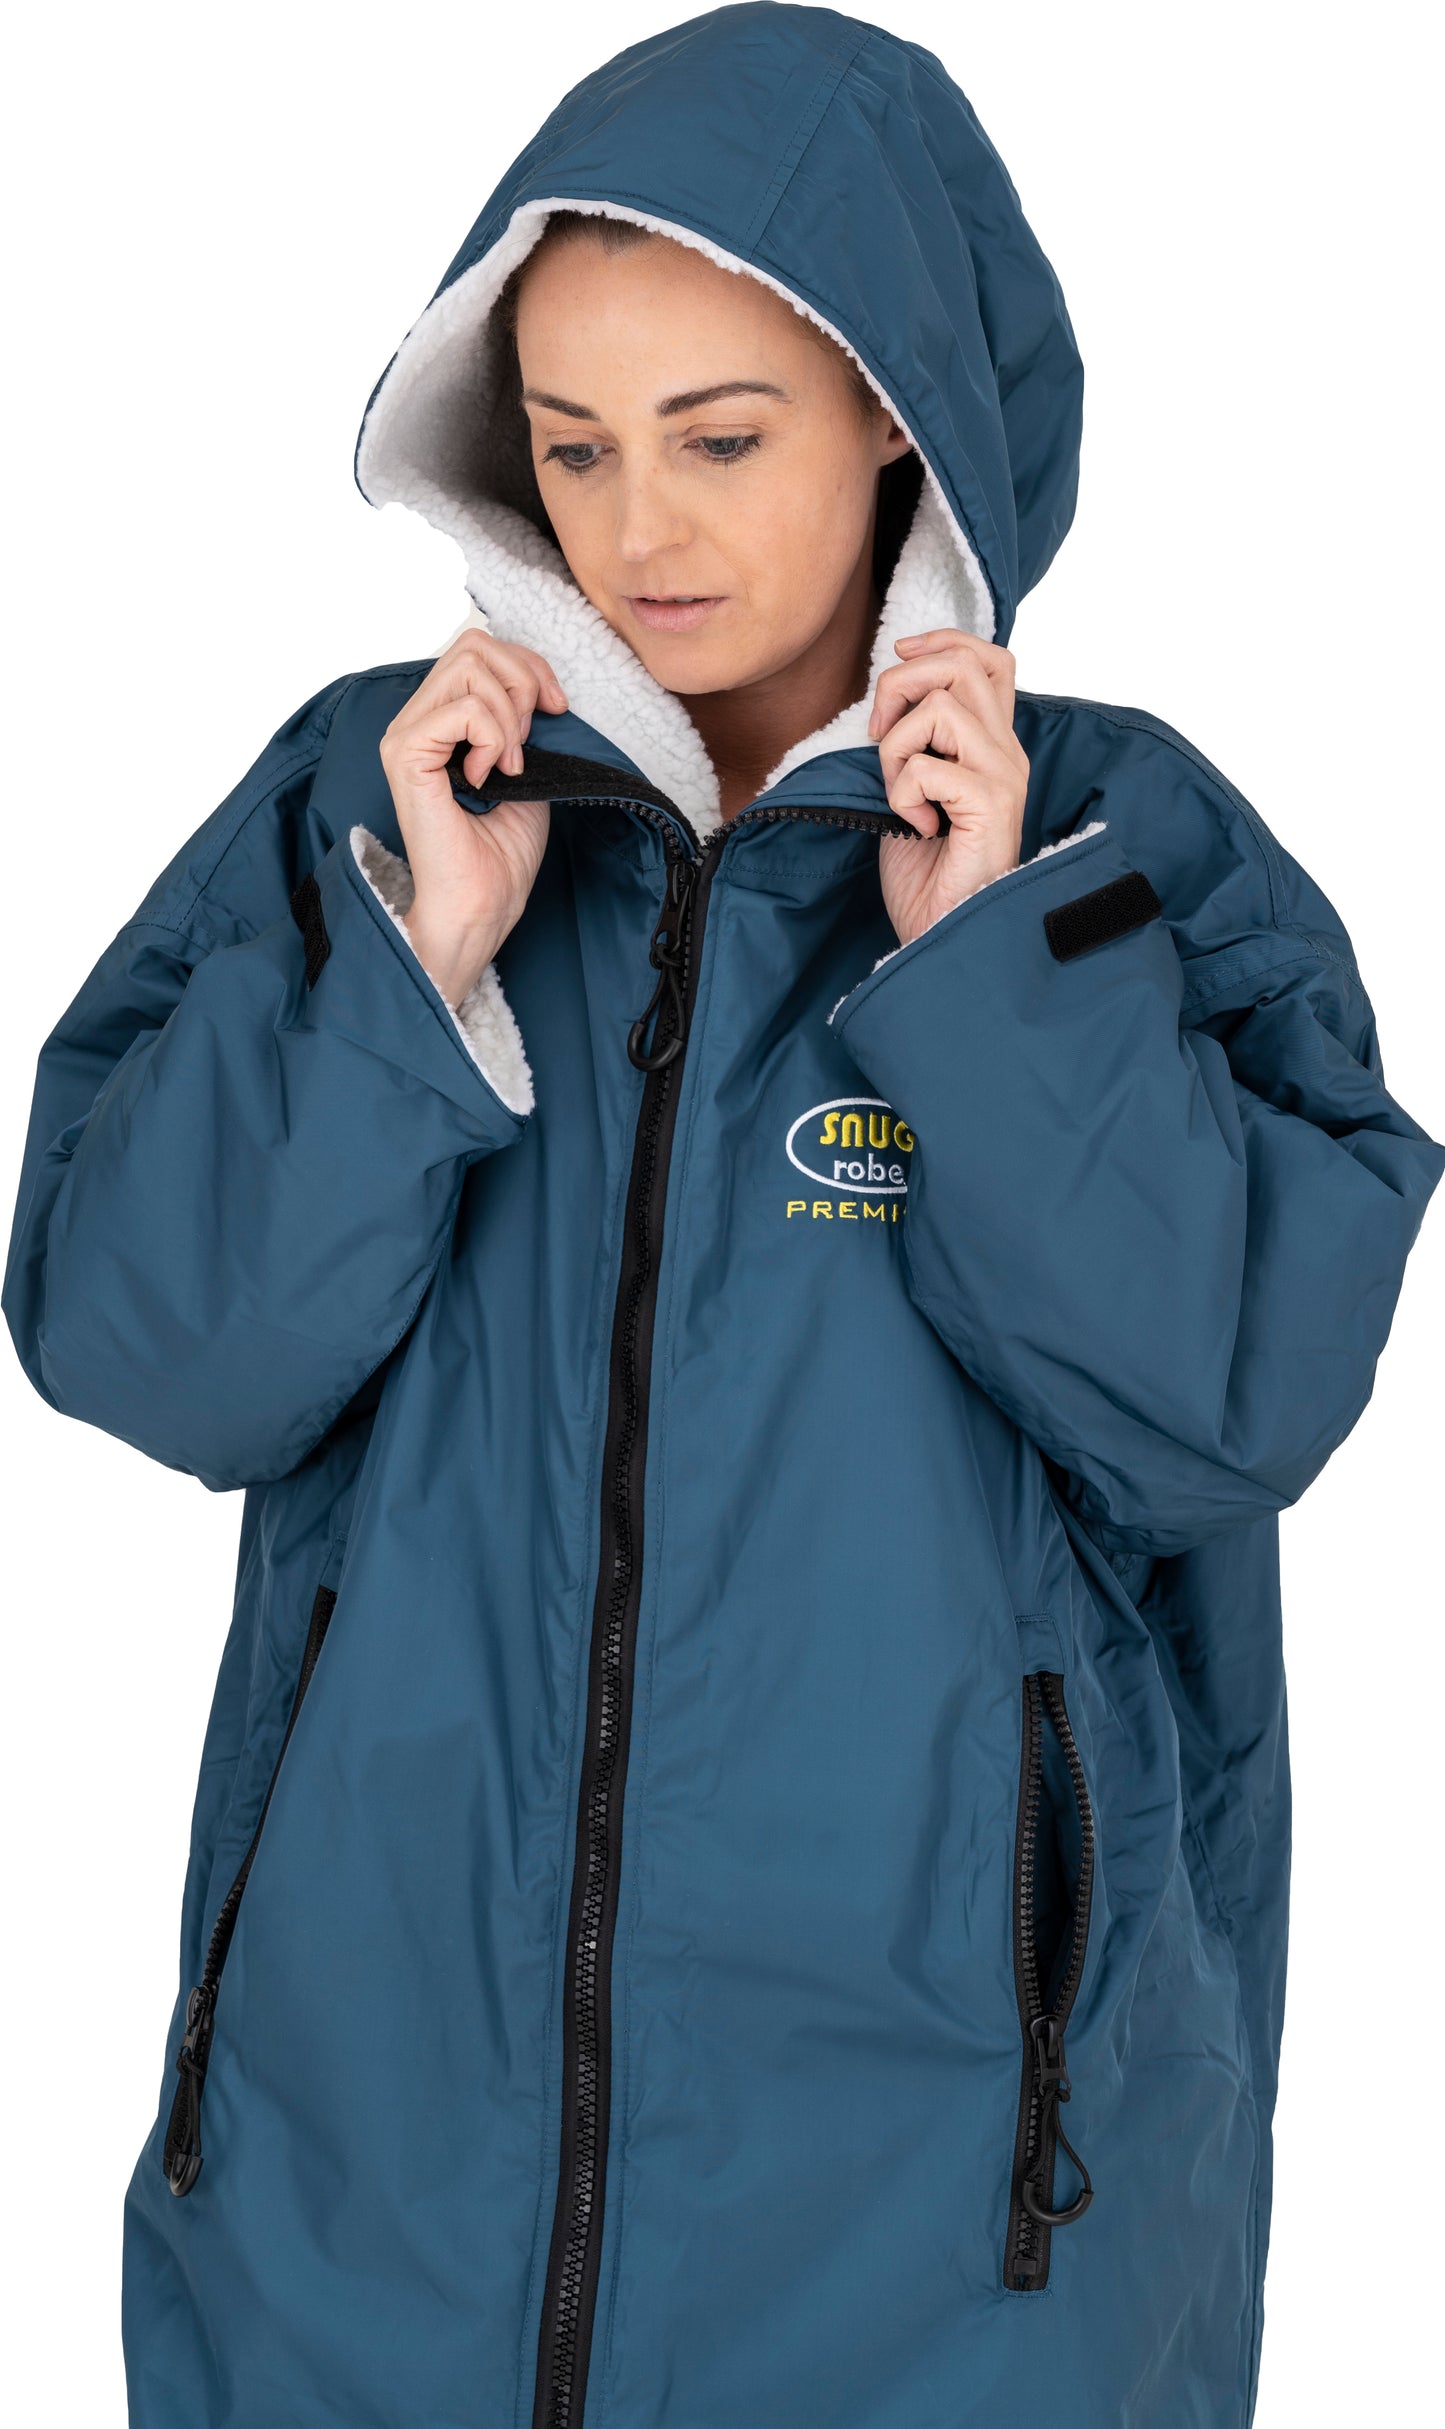 Ultra Warm Fleece Lined Weatherproof Jacket / Outdoor Changing